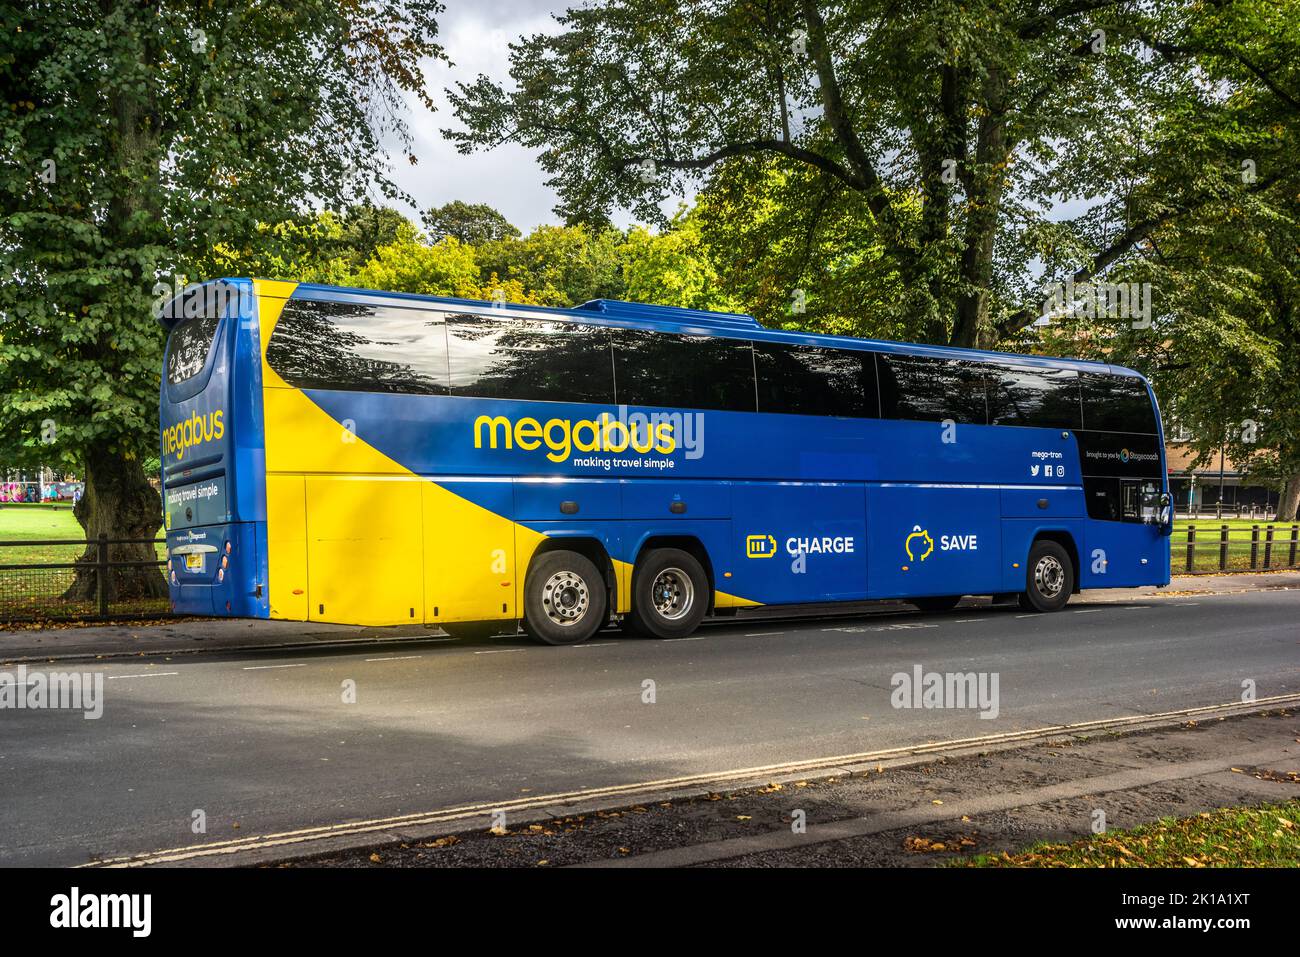 Megabus - cheap transport / coach operator - coach parked in Southampton, Hampshire, England, UK Stock Photo